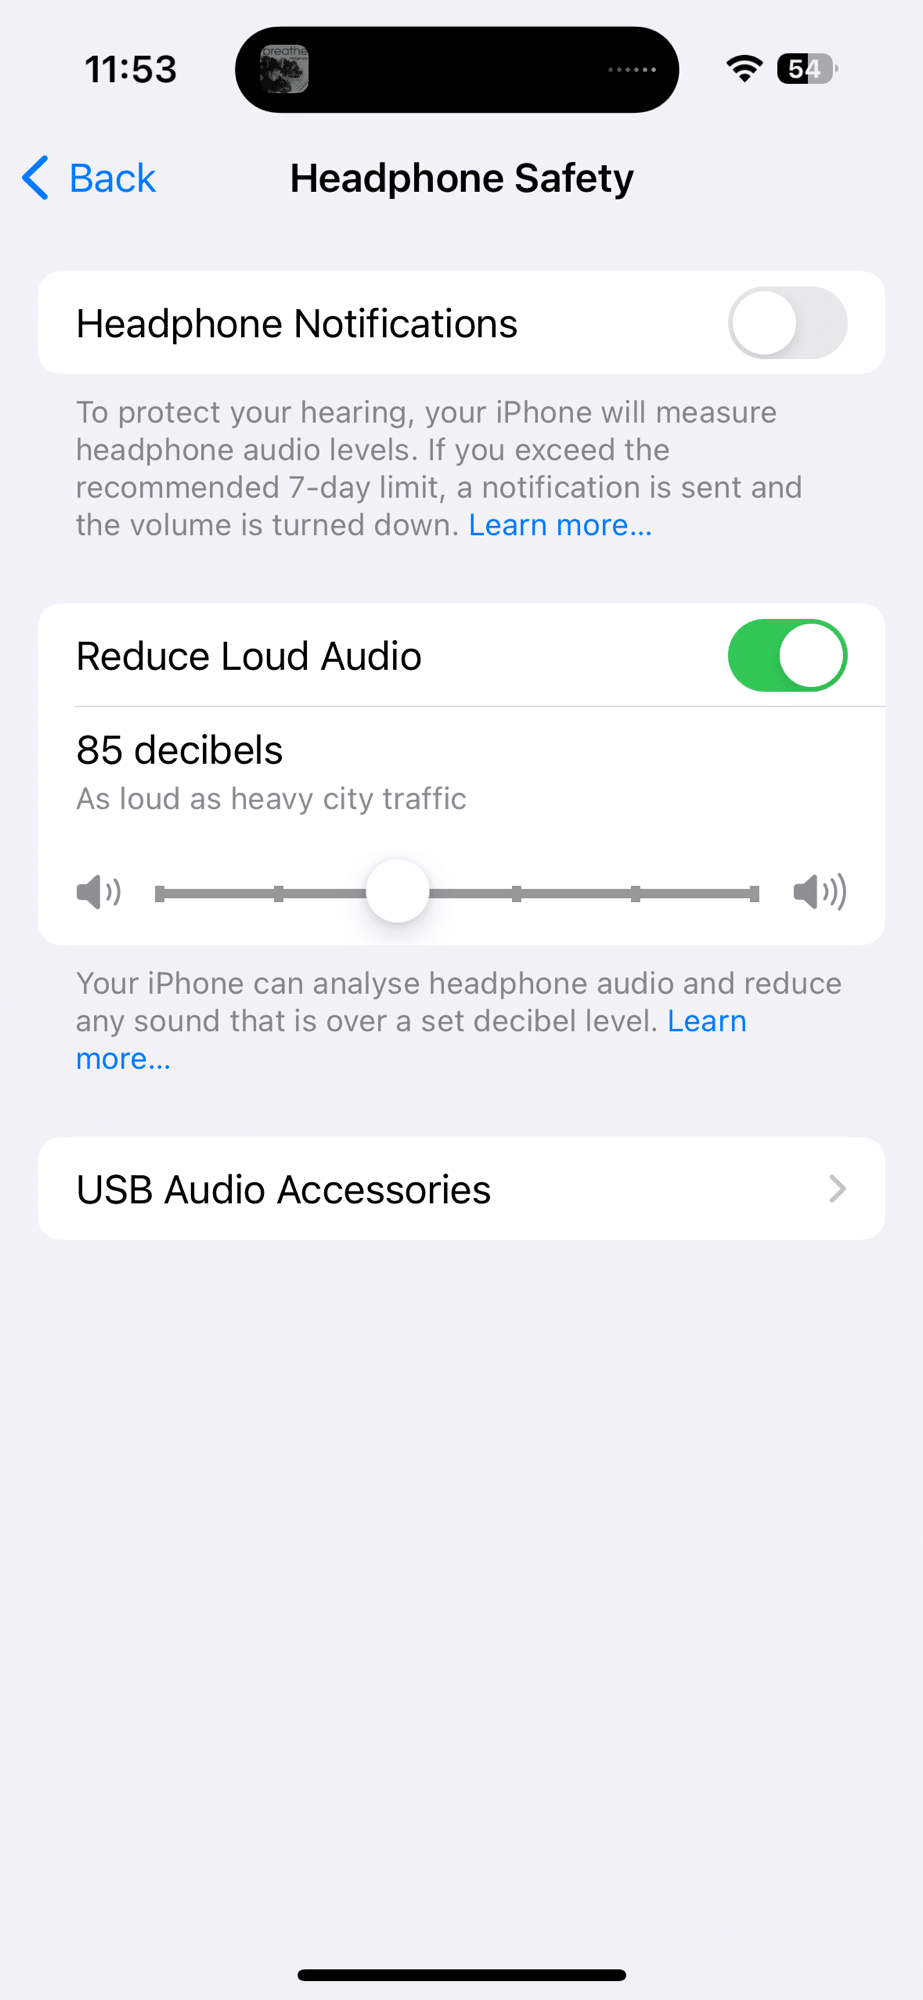 Loud audio setting on iPhones